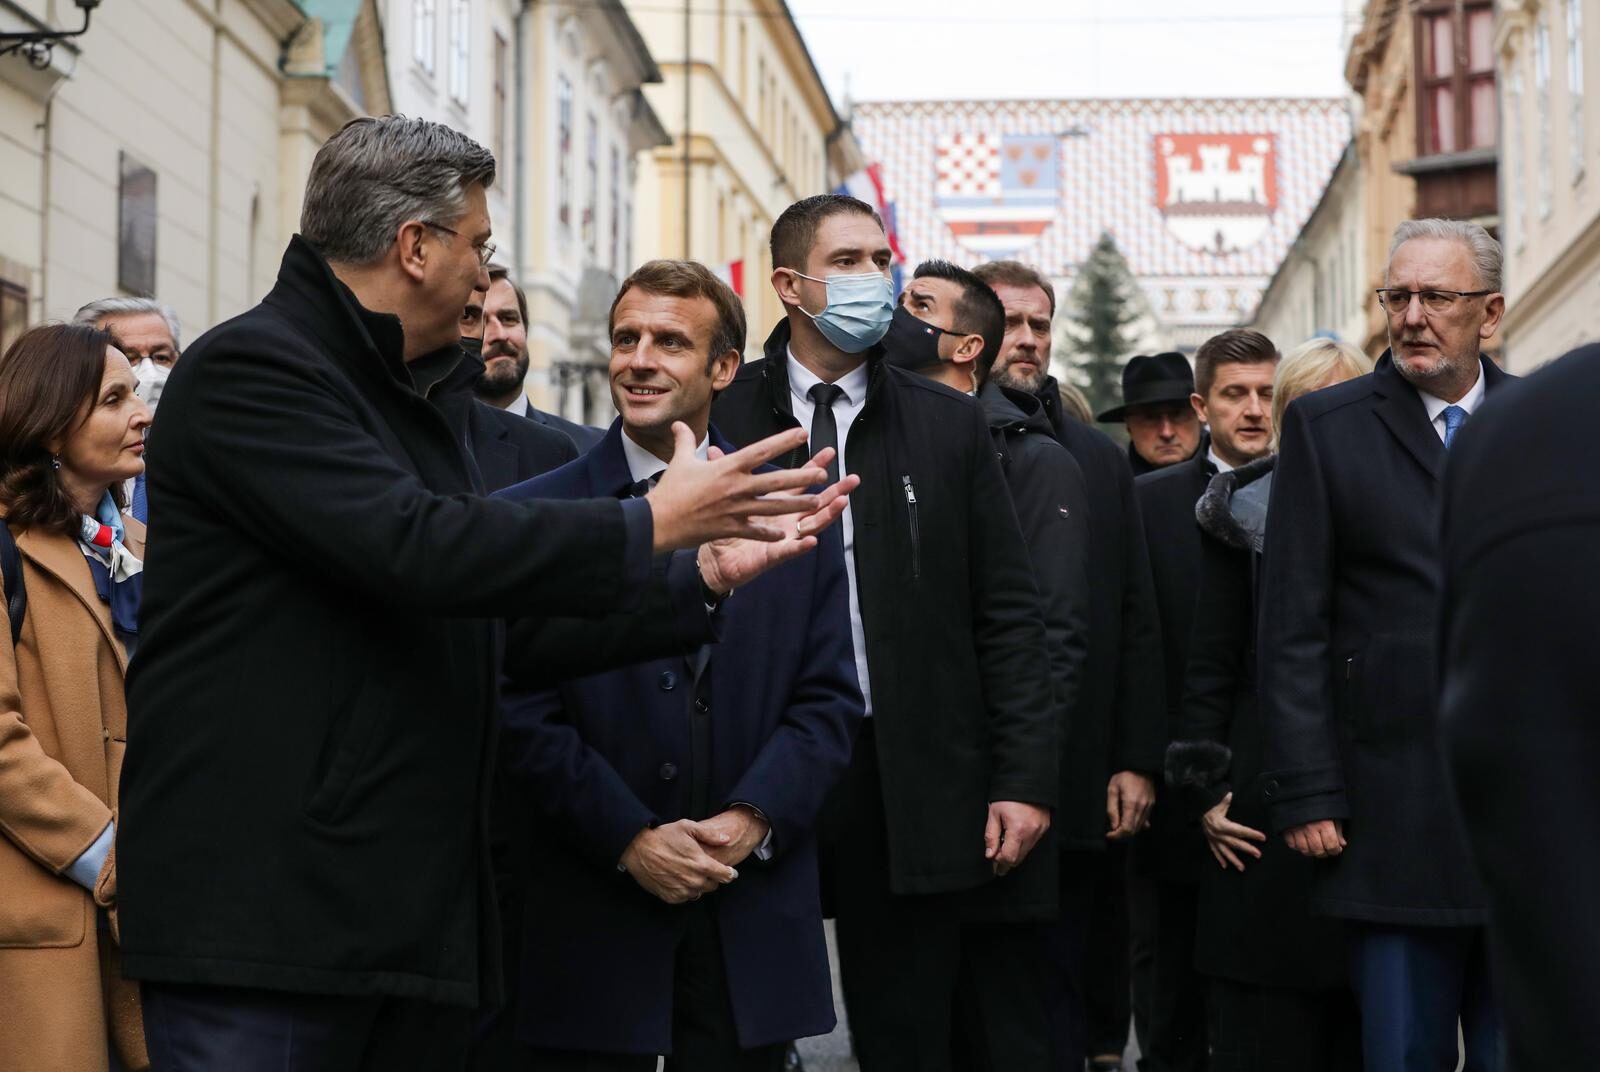 Andrej Plenković i Emmanuel Macron prošetali su Gornjim gradom